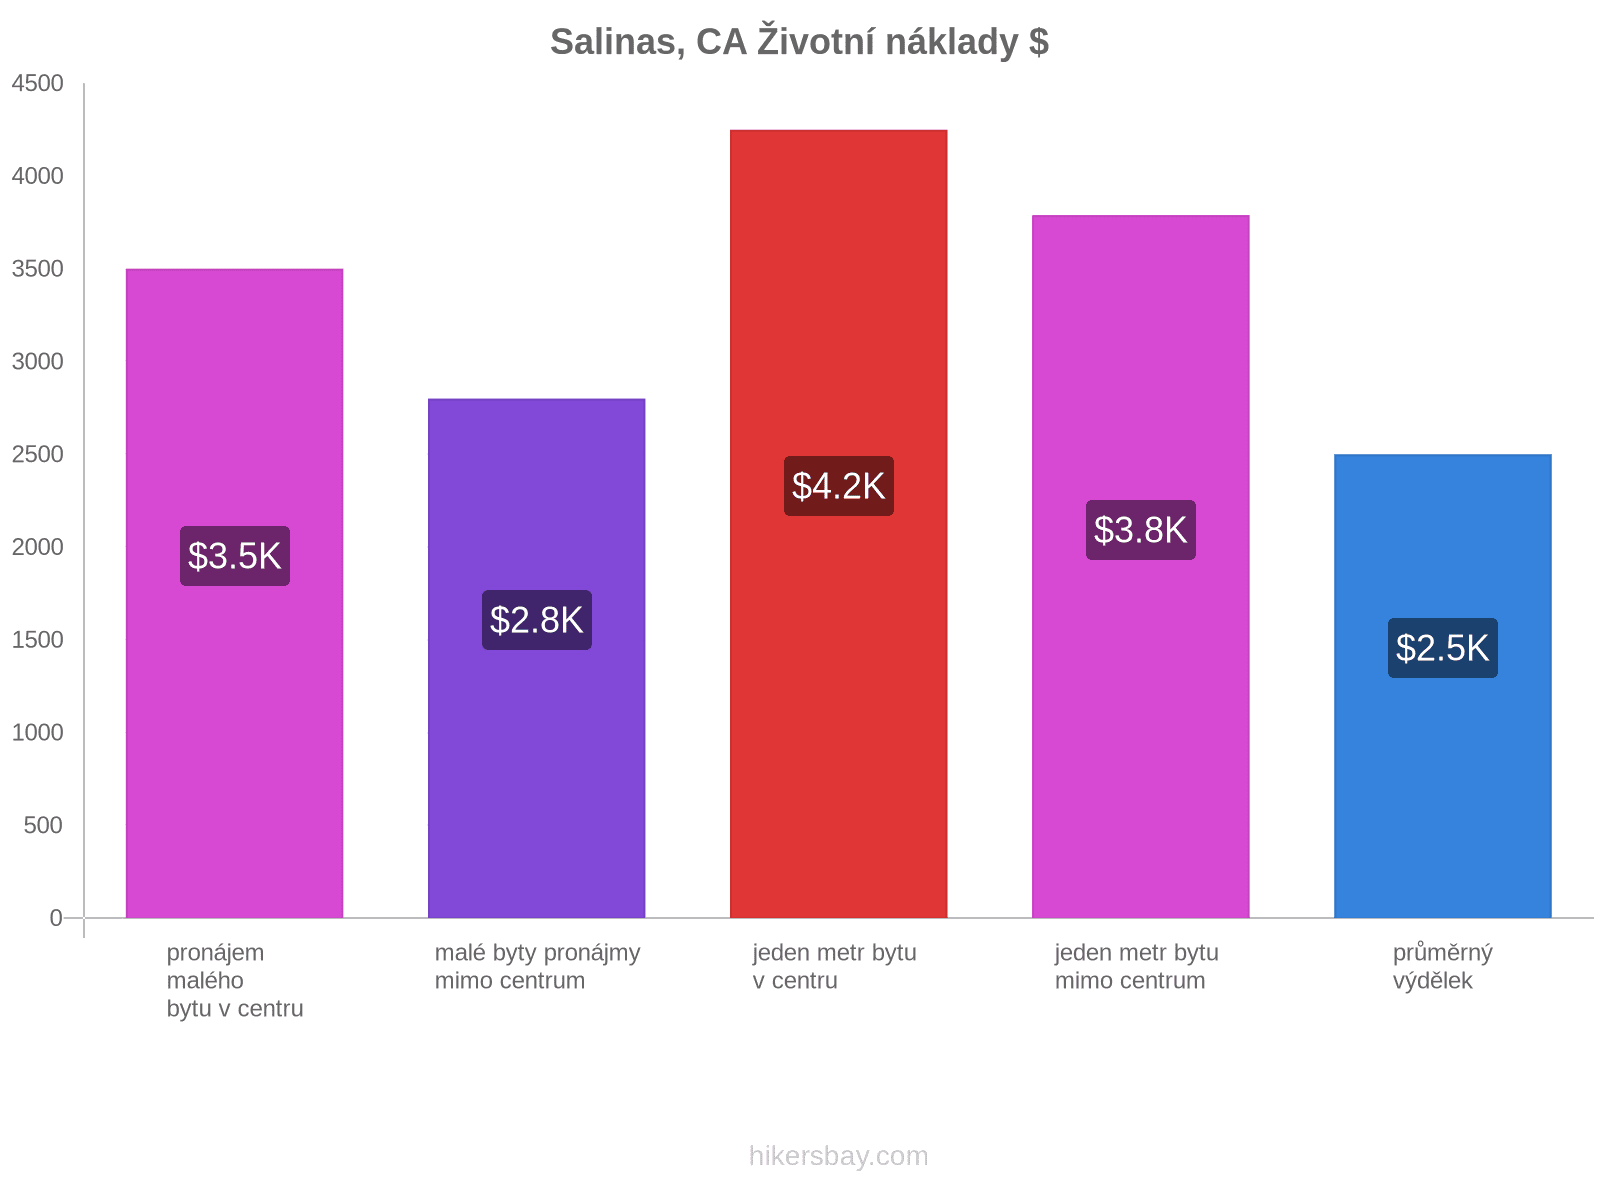 Salinas, CA životní náklady hikersbay.com